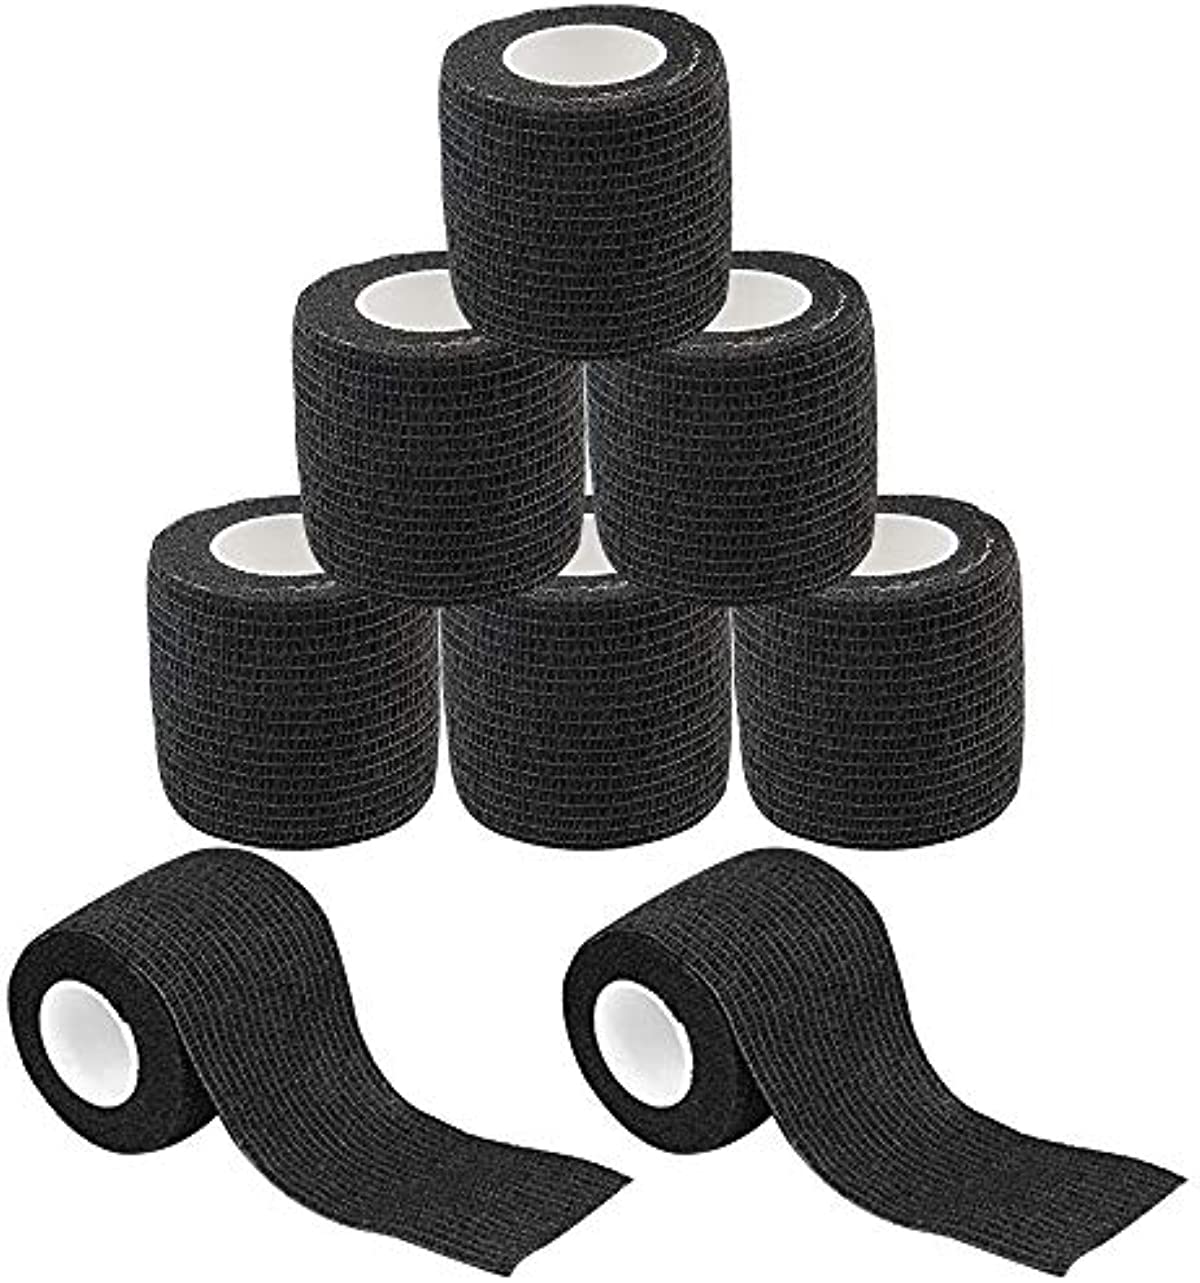 Self-Adherent Grip Tape - Yuelong 8Pcs Cohesive Tape Grip Wrap Cover Self Adhesive Tape Strong Sports Tape Black Bandage Rolls Athletic Tape